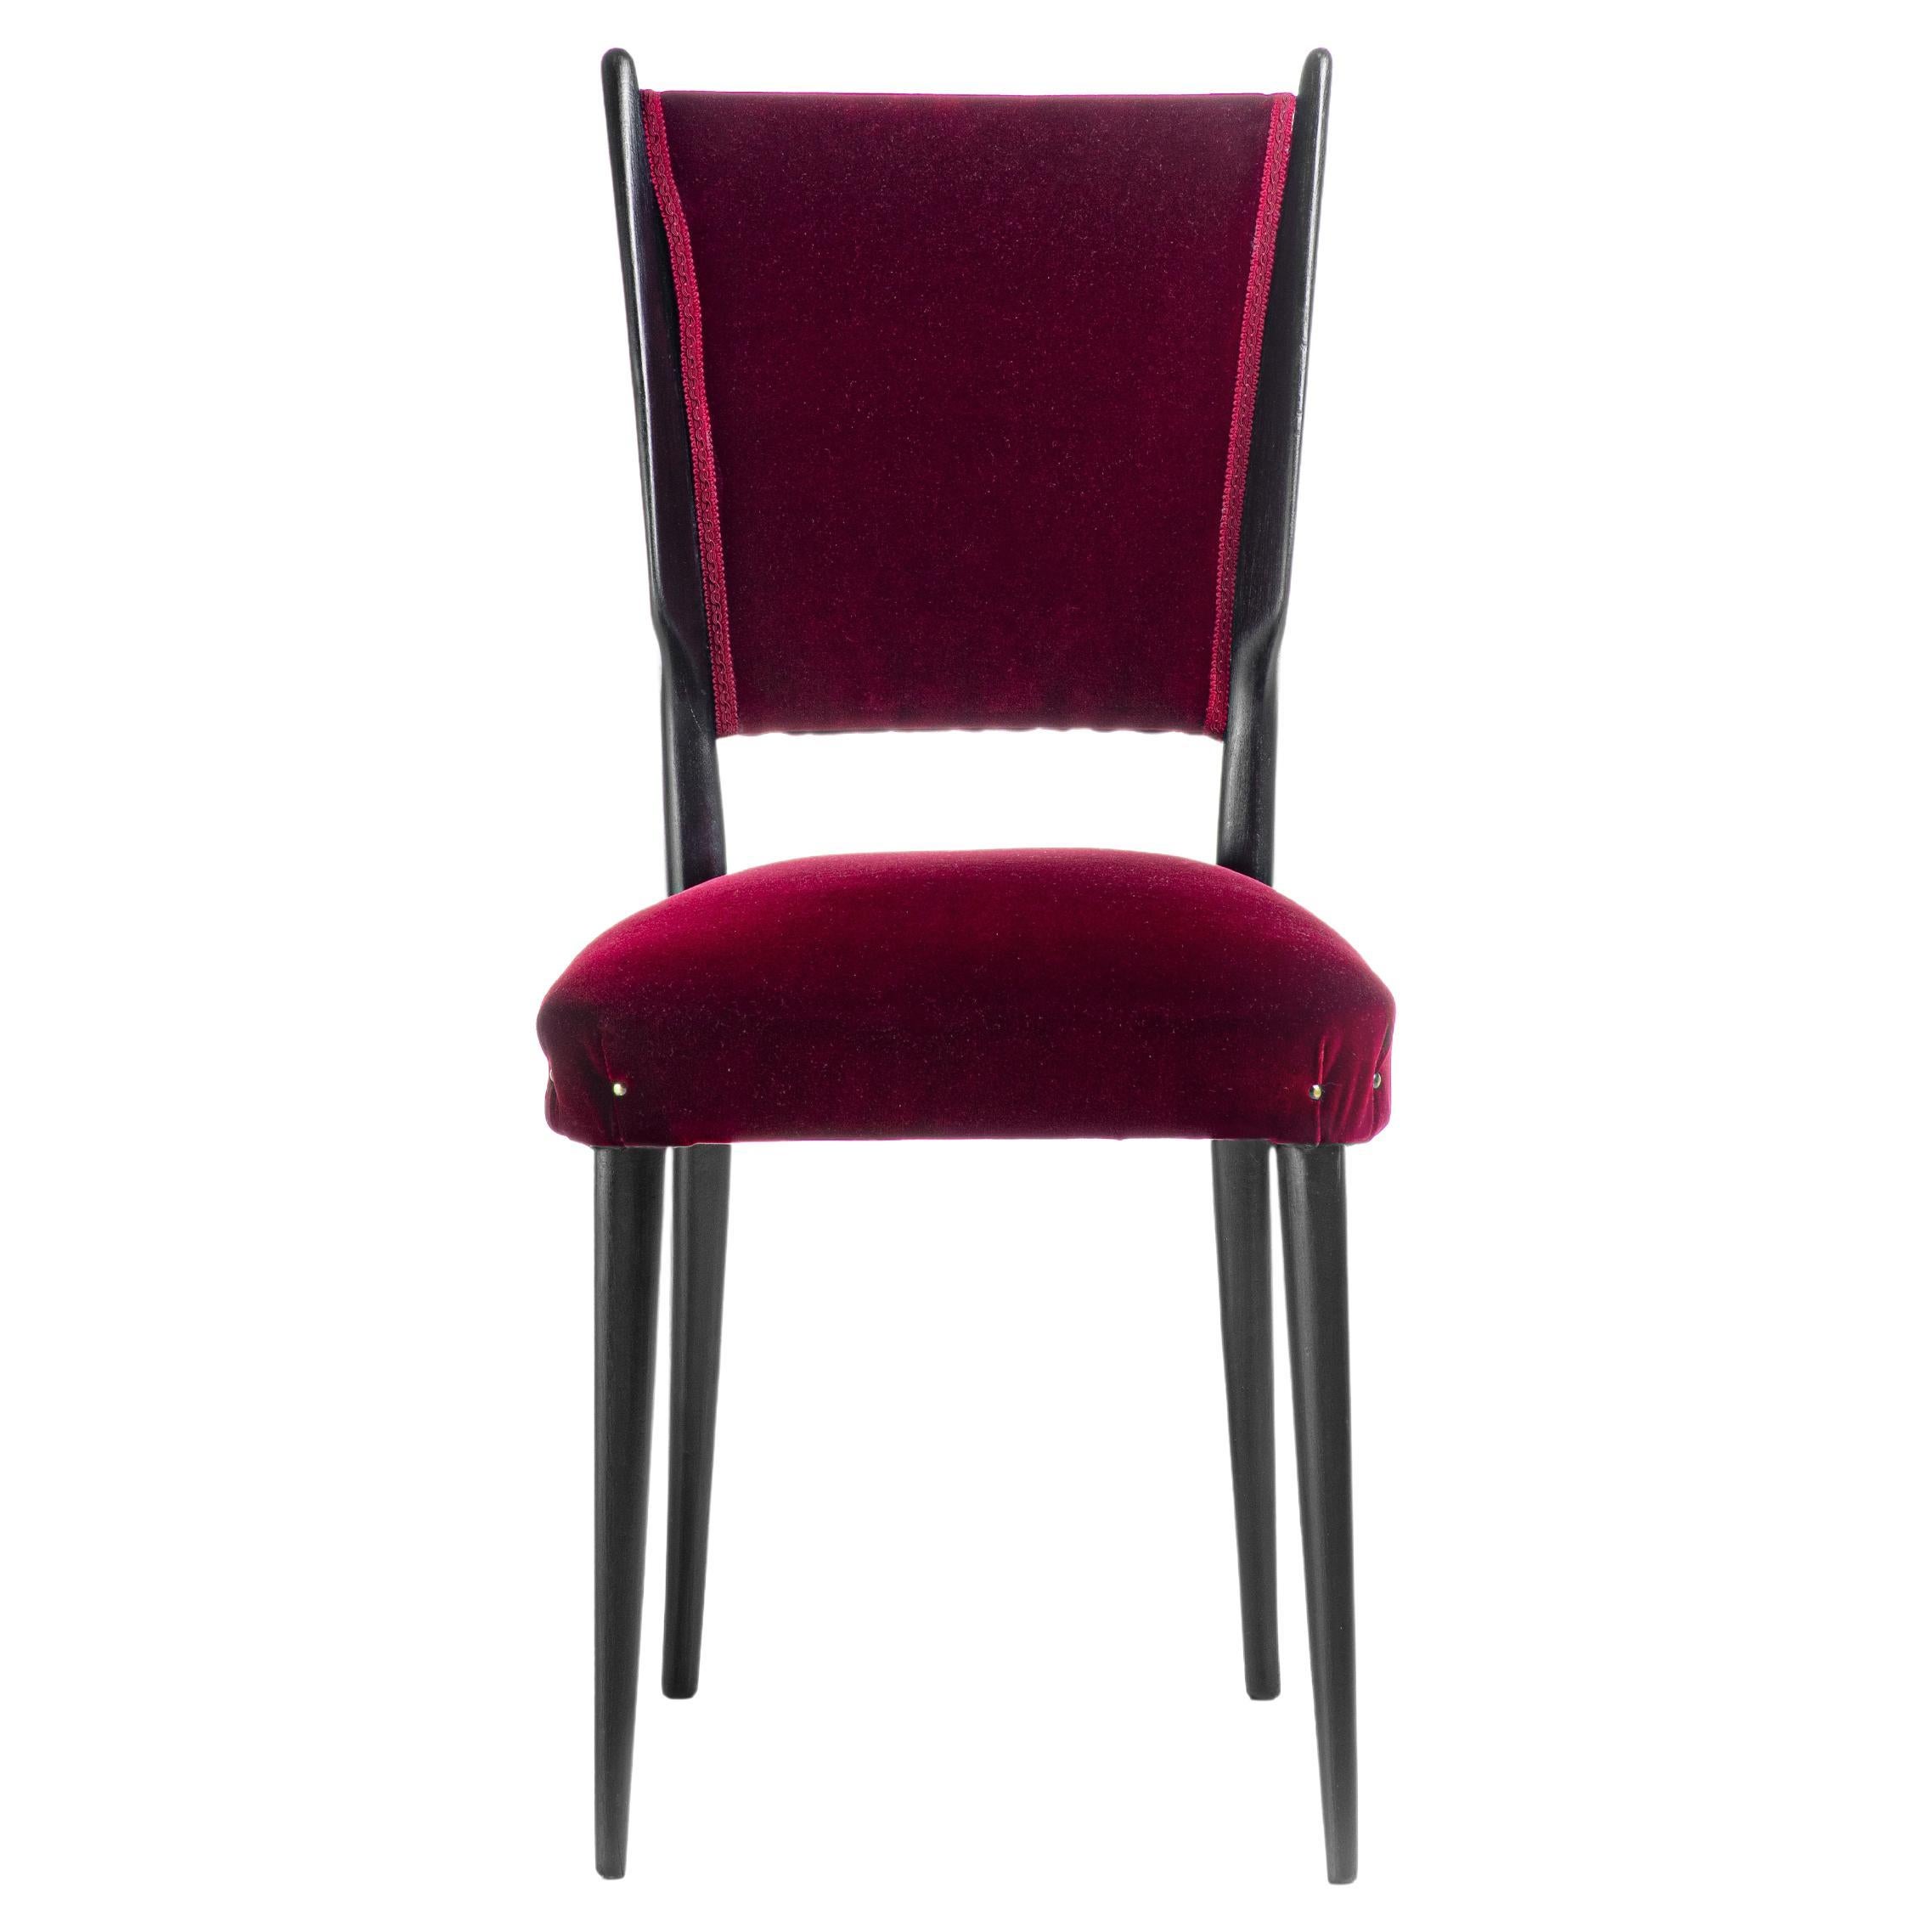 Vintage Velvet Chair Bordeaux Red Black Wood For Sale